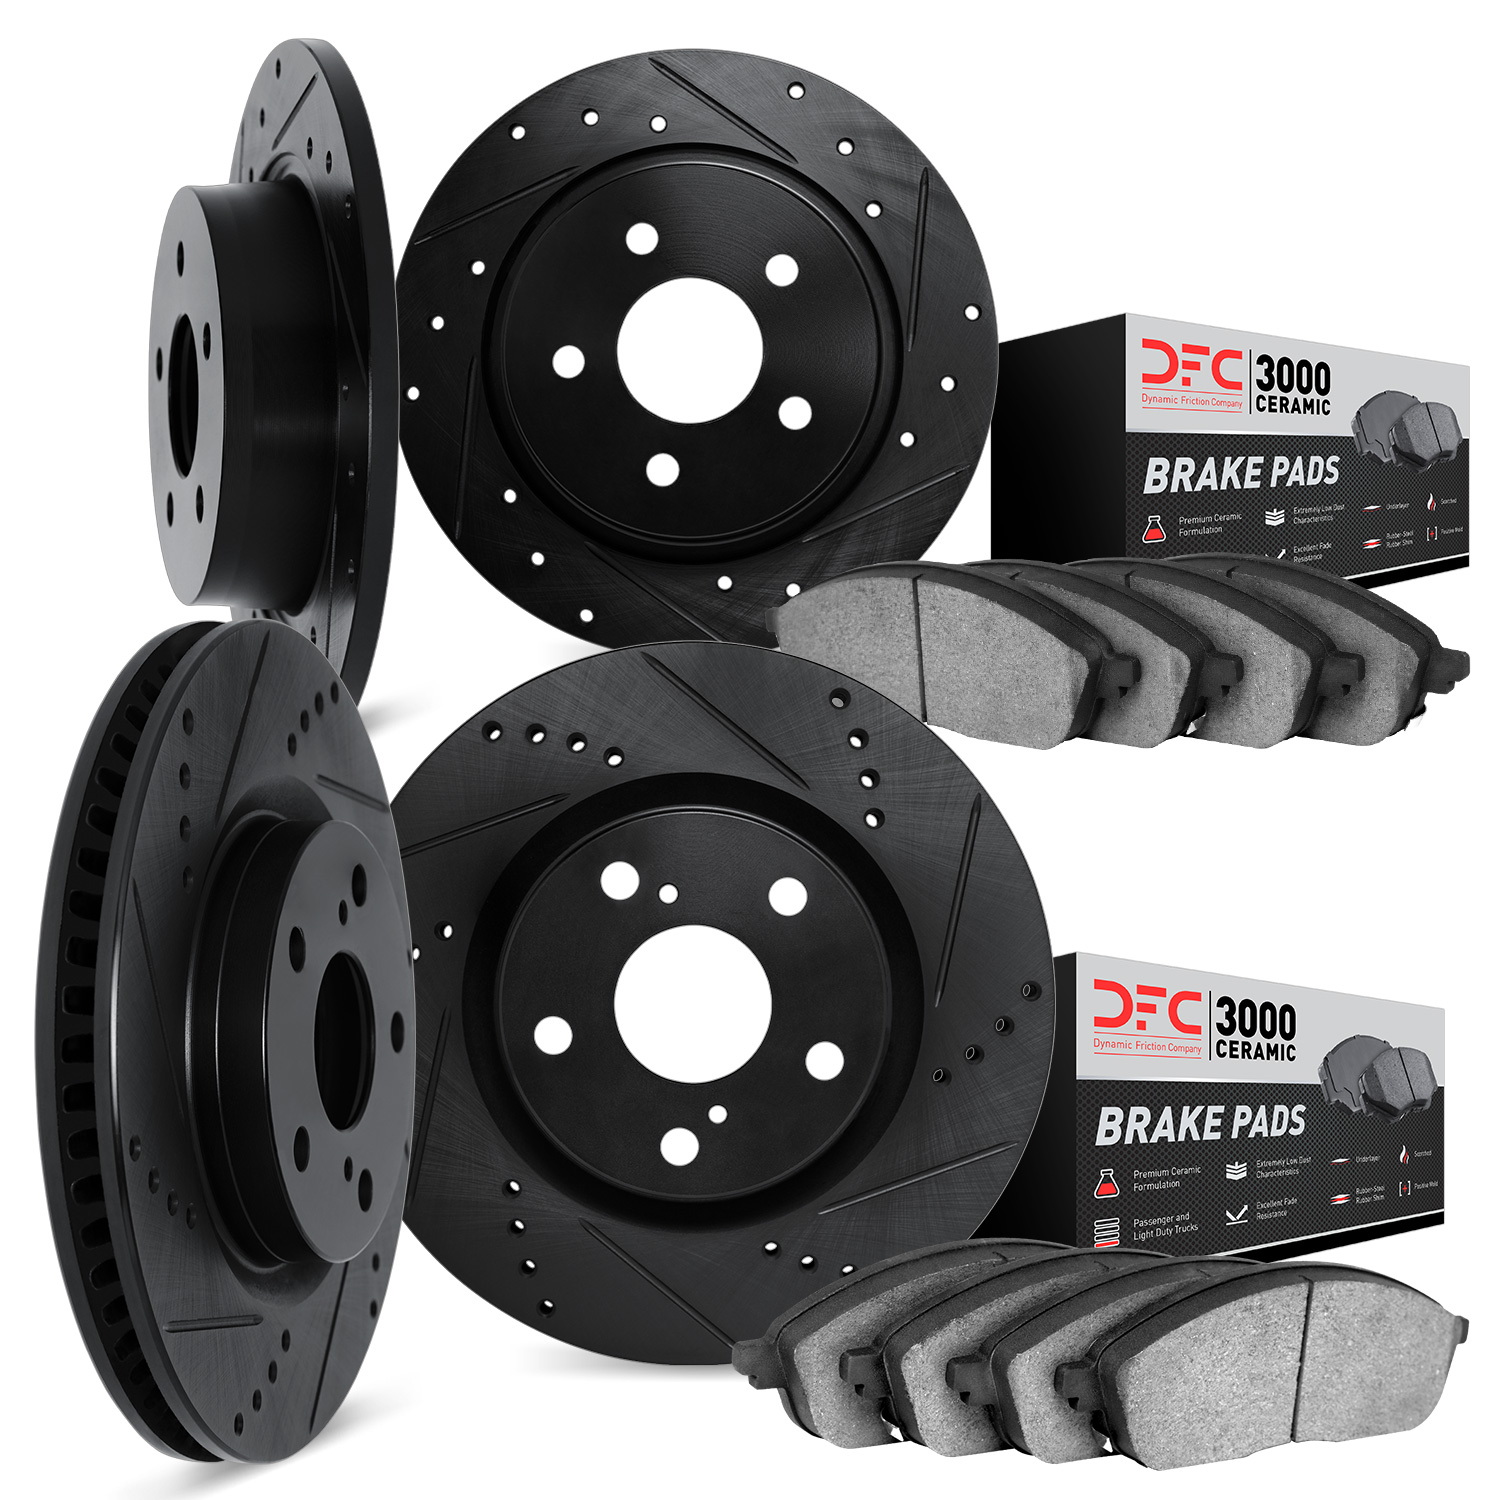 8304-54102 Drilled/Slotted Brake Rotors with 3000-Series Ceramic Brake Pads Kit [Black], 2013-2020 Ford/Lincoln/Mercury/Mazda, P